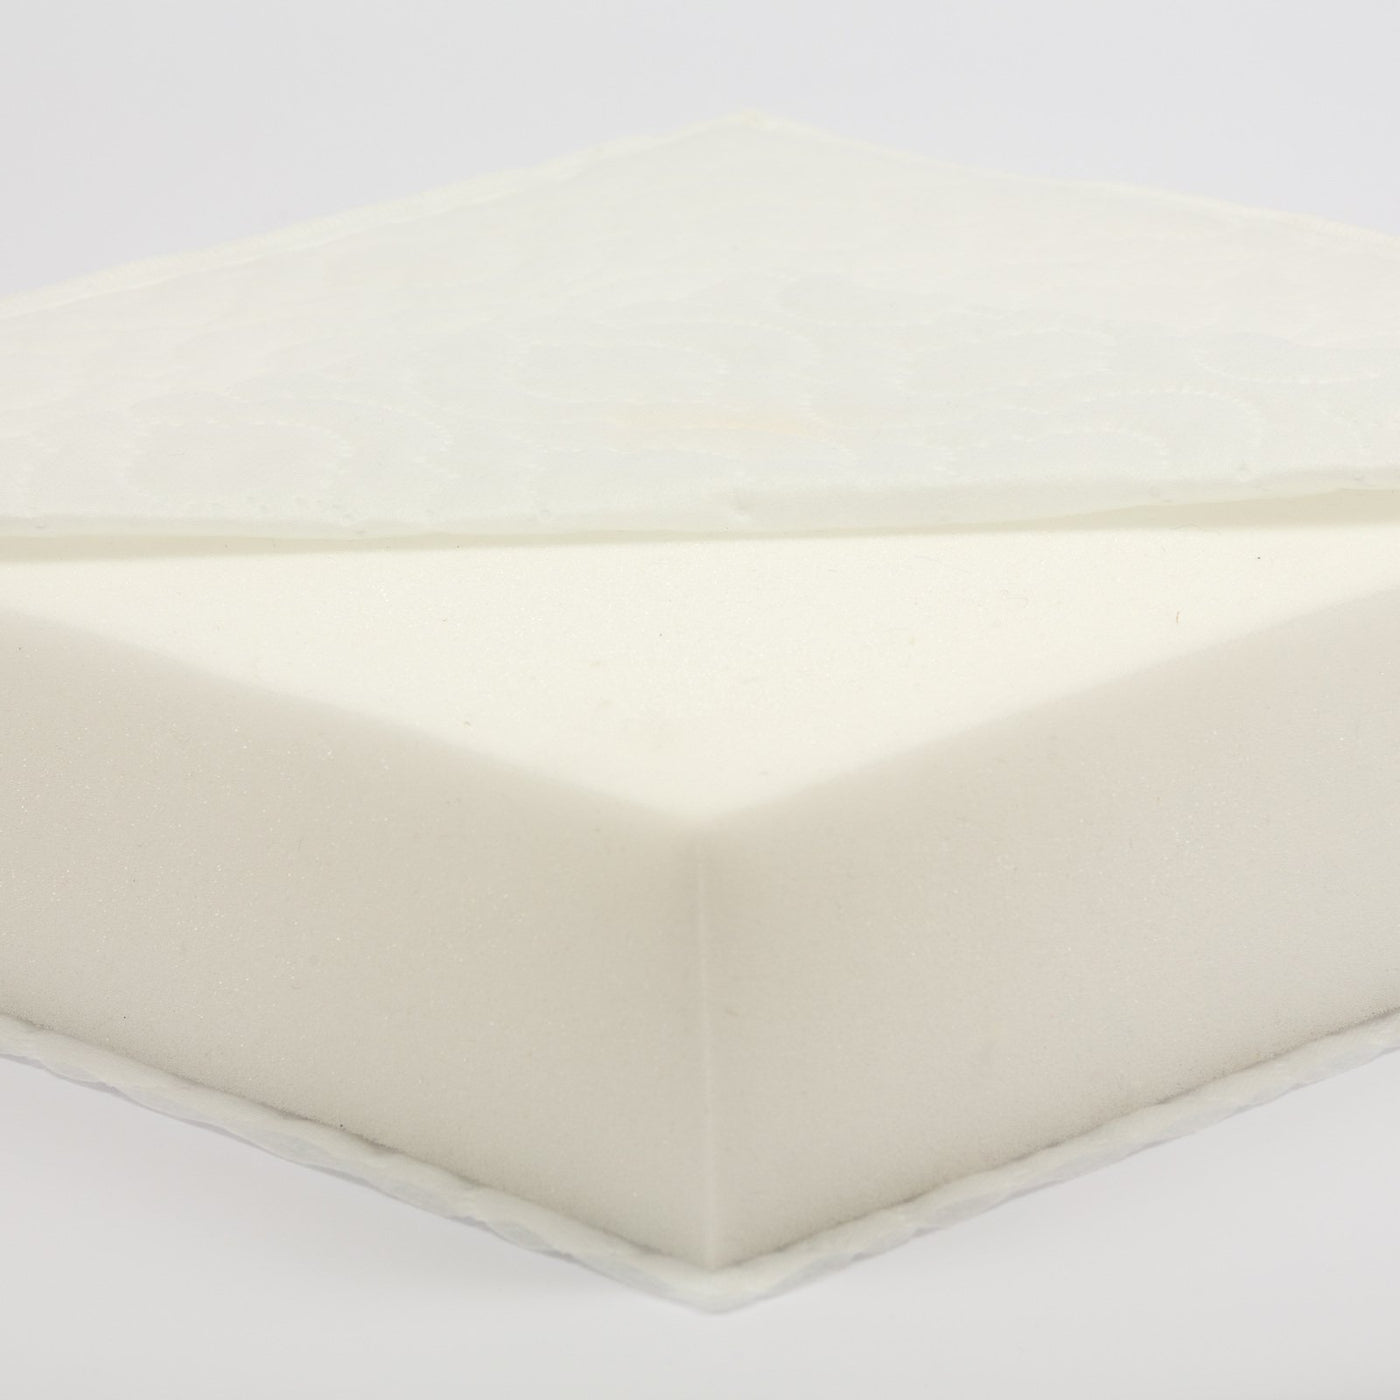 Cot Bed Mattress - Foam | Earthlets.com